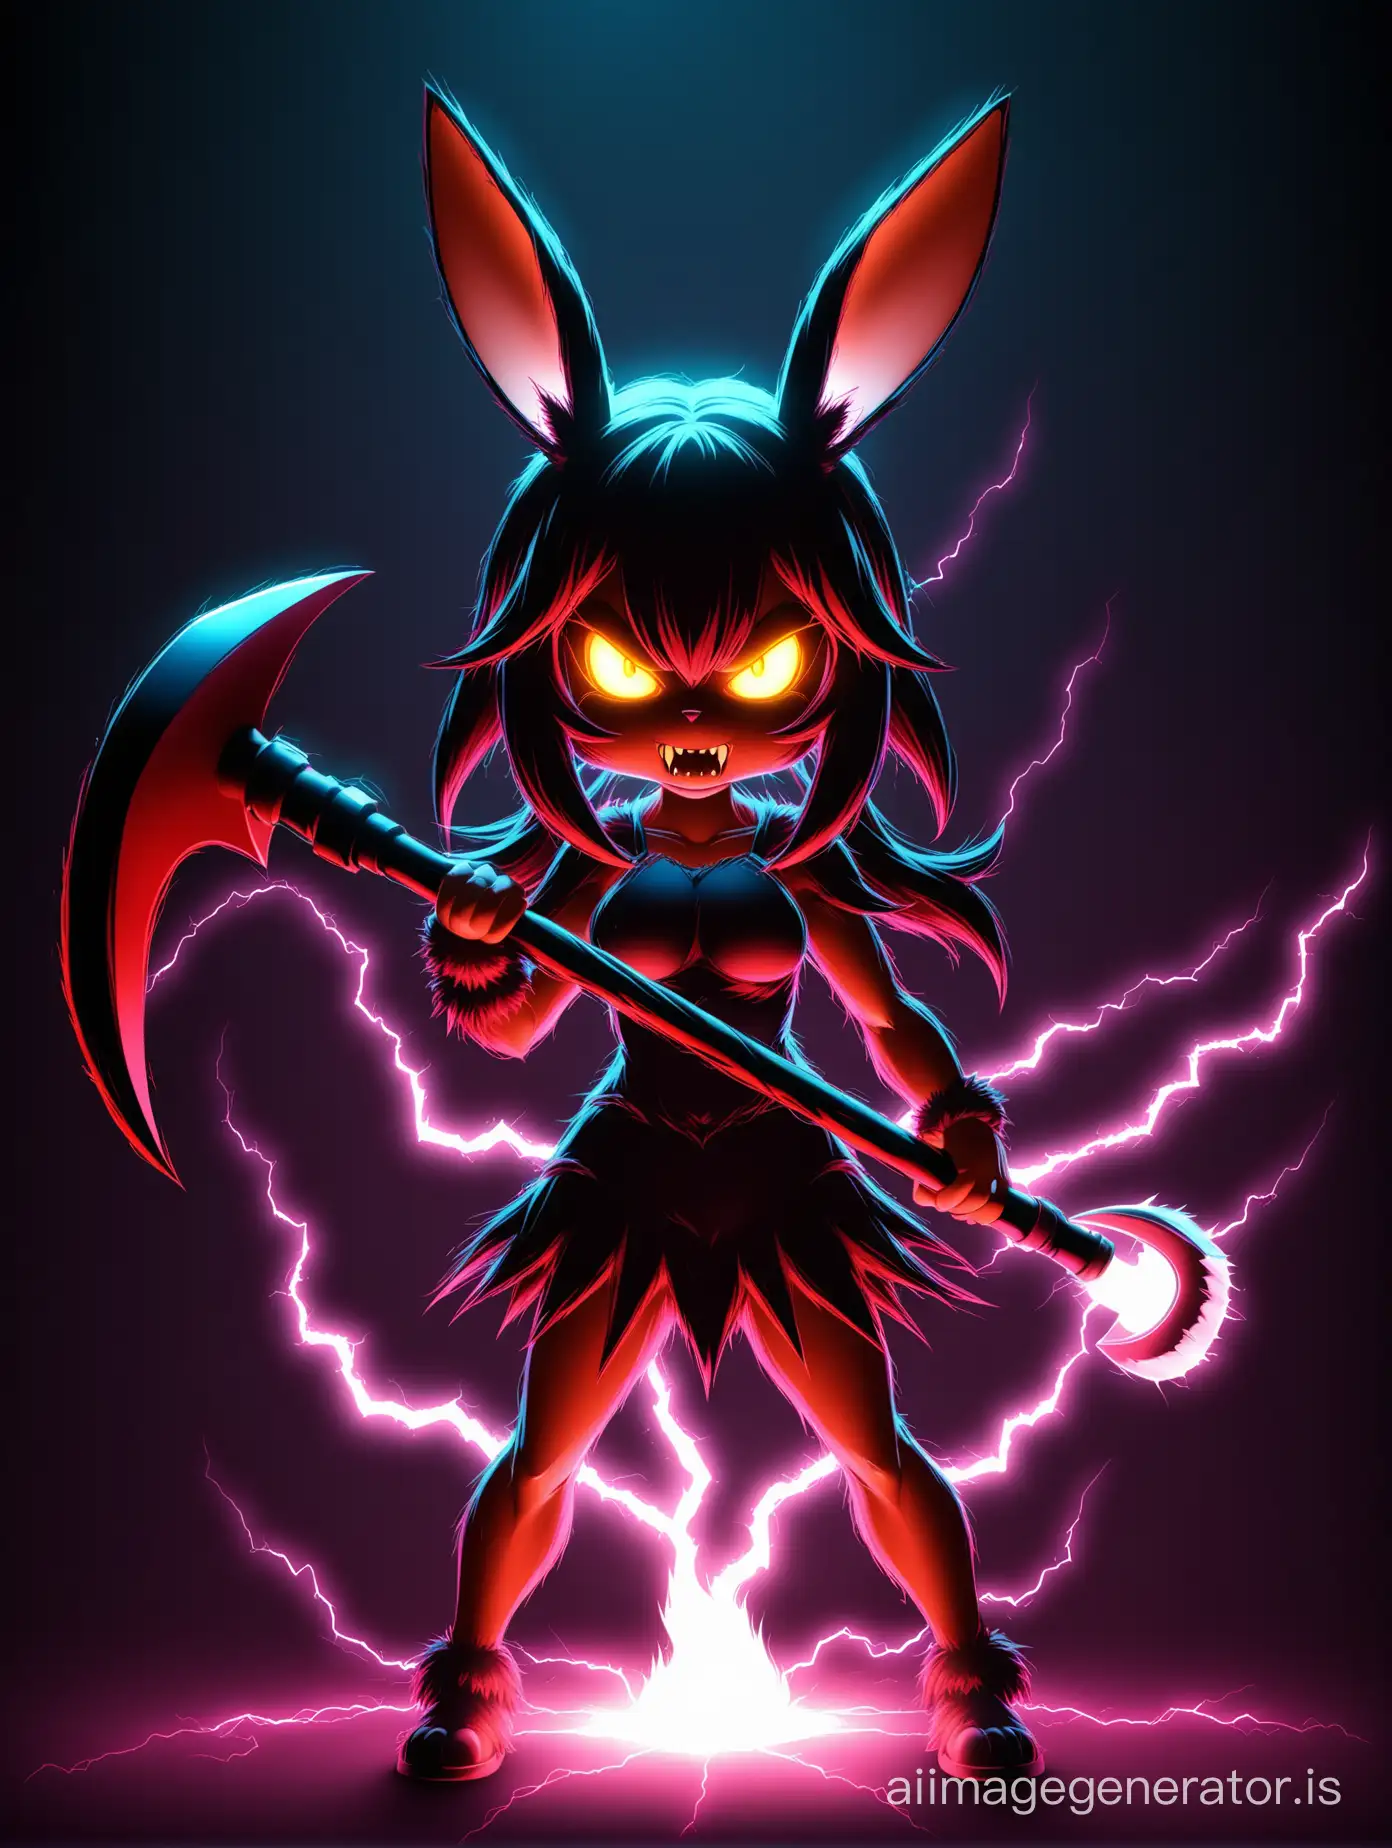 Dark-Fantasy-Demon-Rabbit-Girl-with-Axe-in-Glowing-3D-Illustration